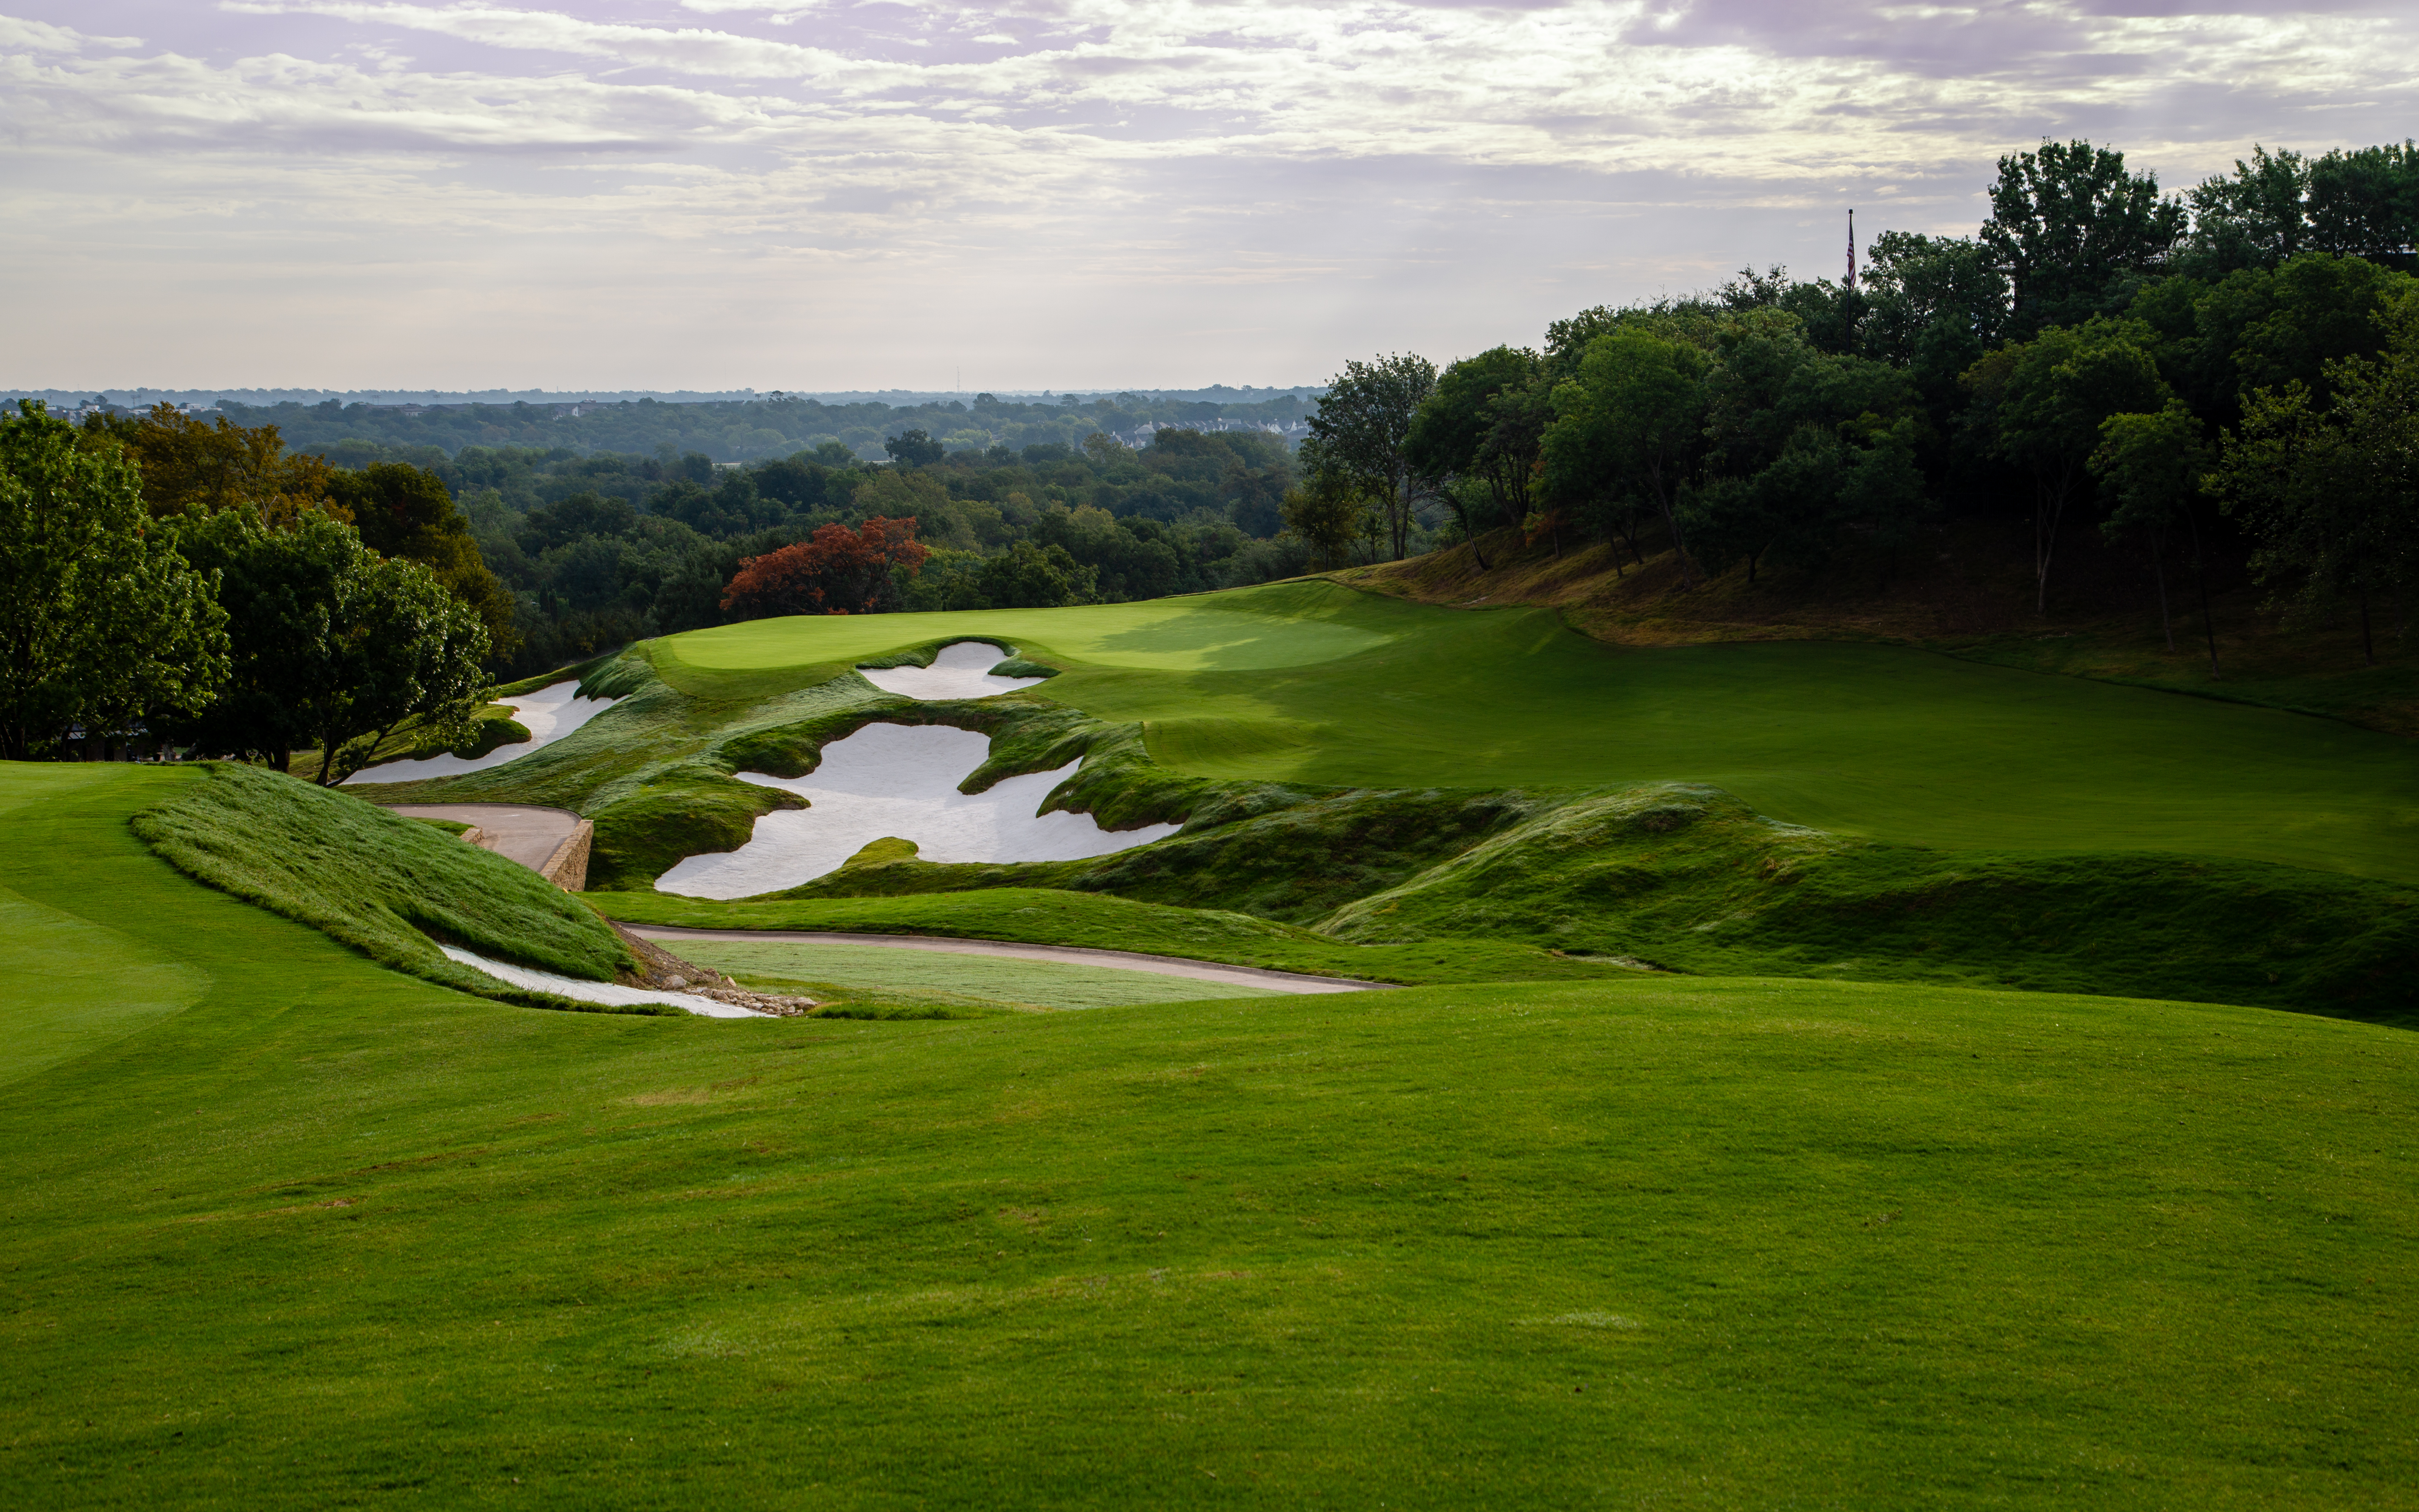 Shady Oaks | Courses | GolfDigest.com